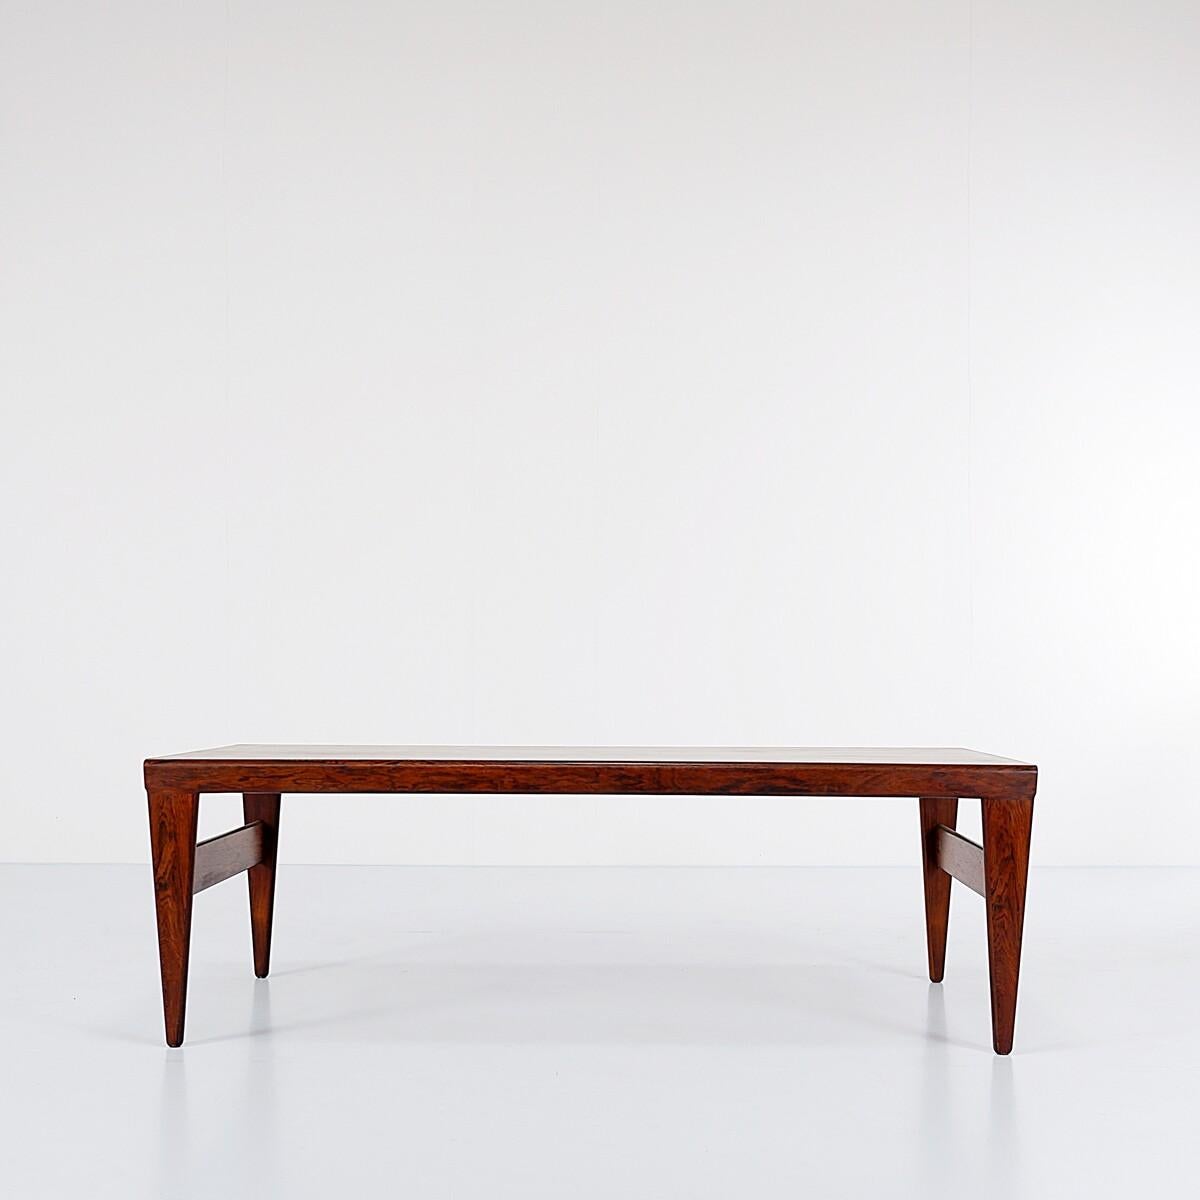 Mid-Century Modern coffee table by Illum Wikkelso, Koefoed's mobelfabrik